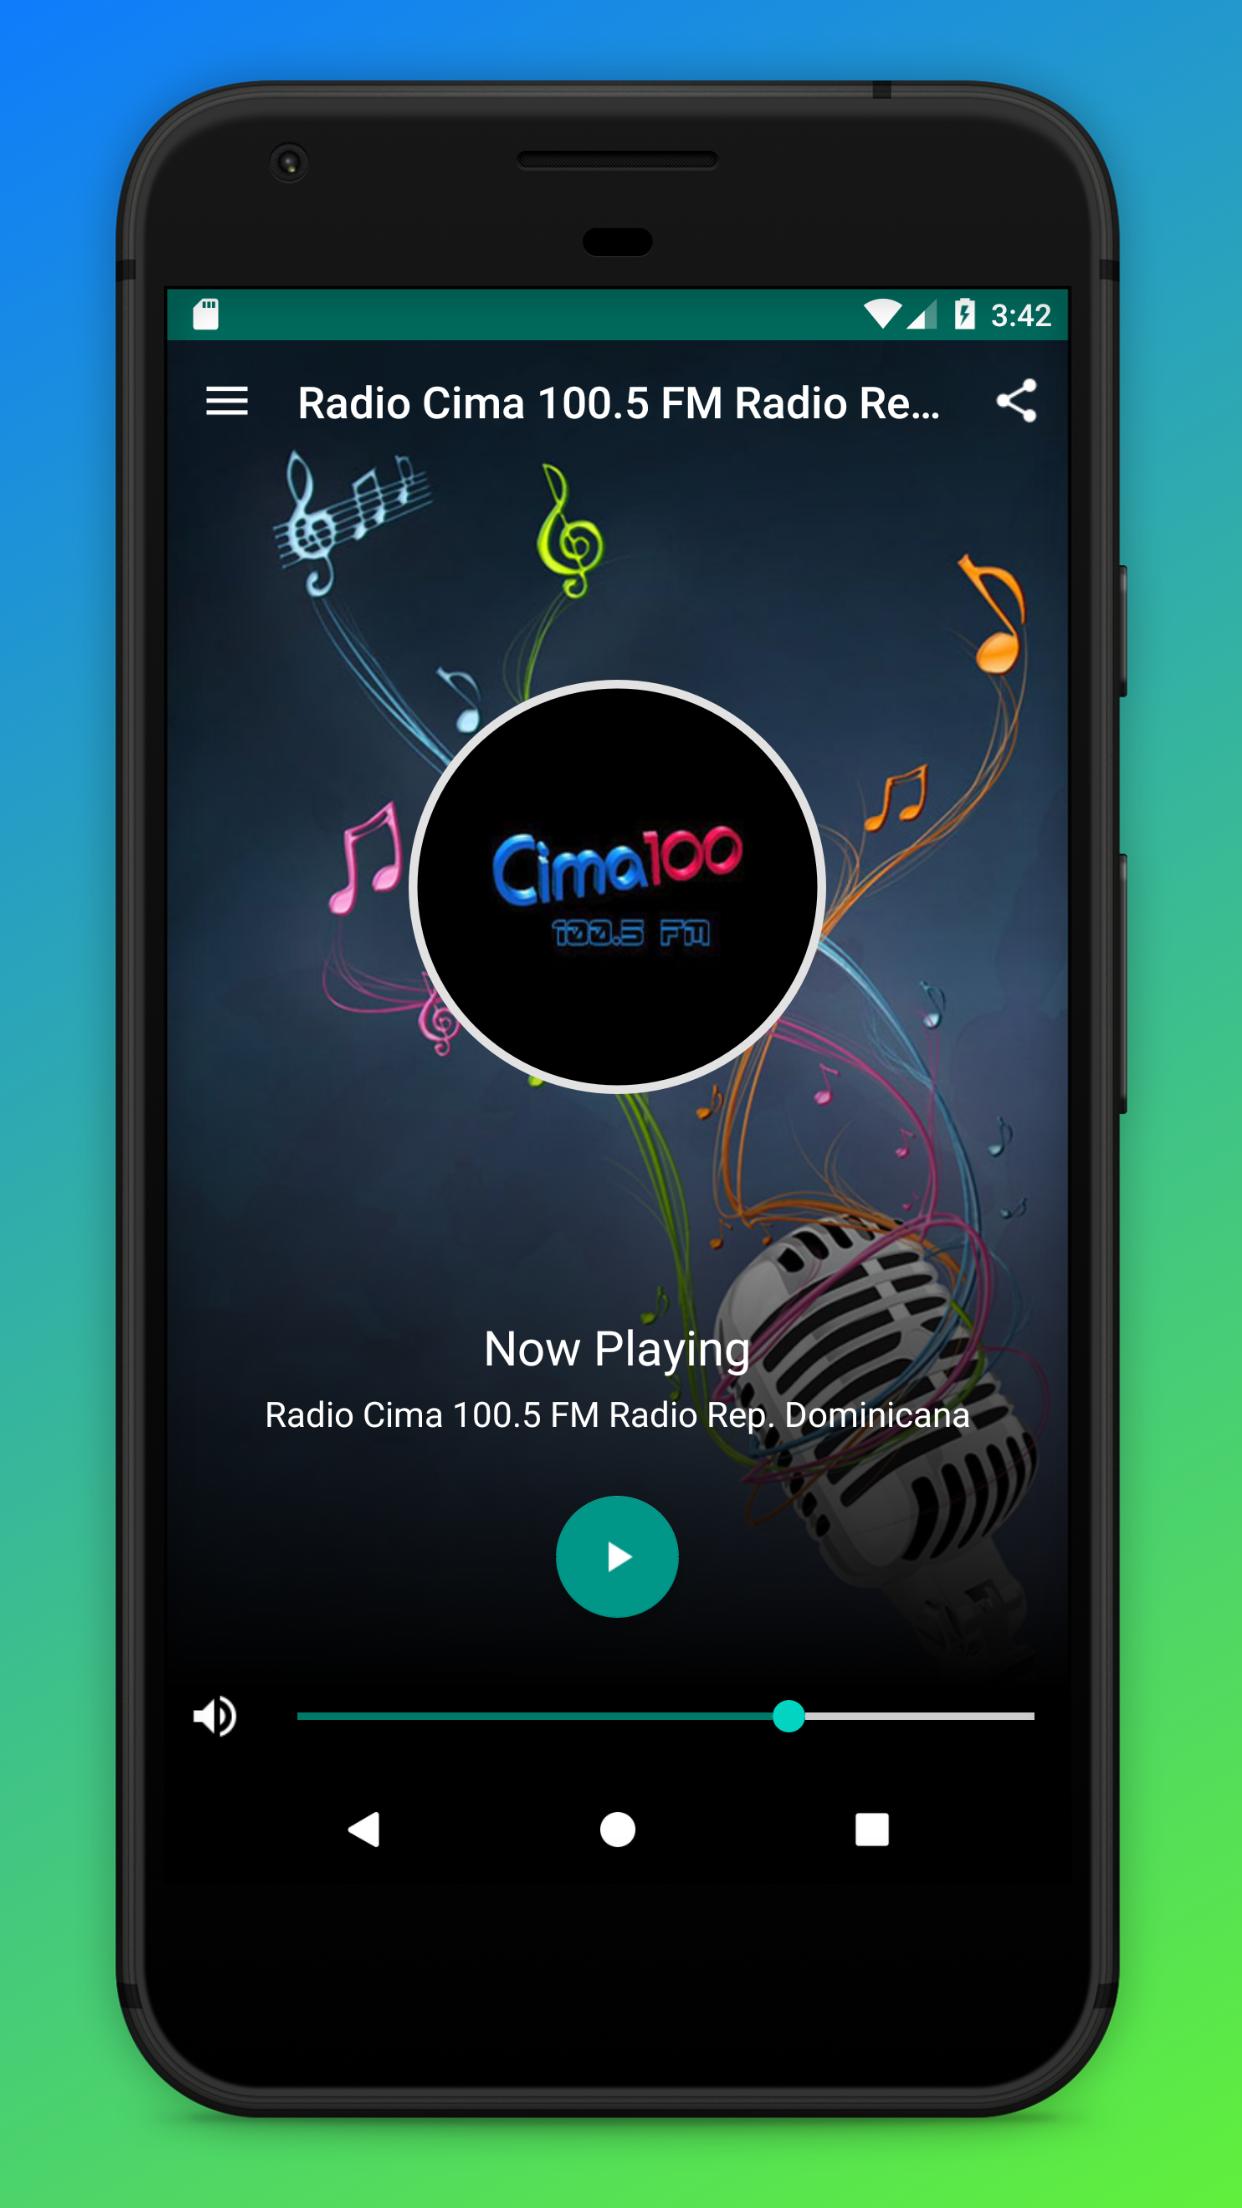 Radio Cima 100.5 FM Radio Dominican Rep. for Android - APK Download